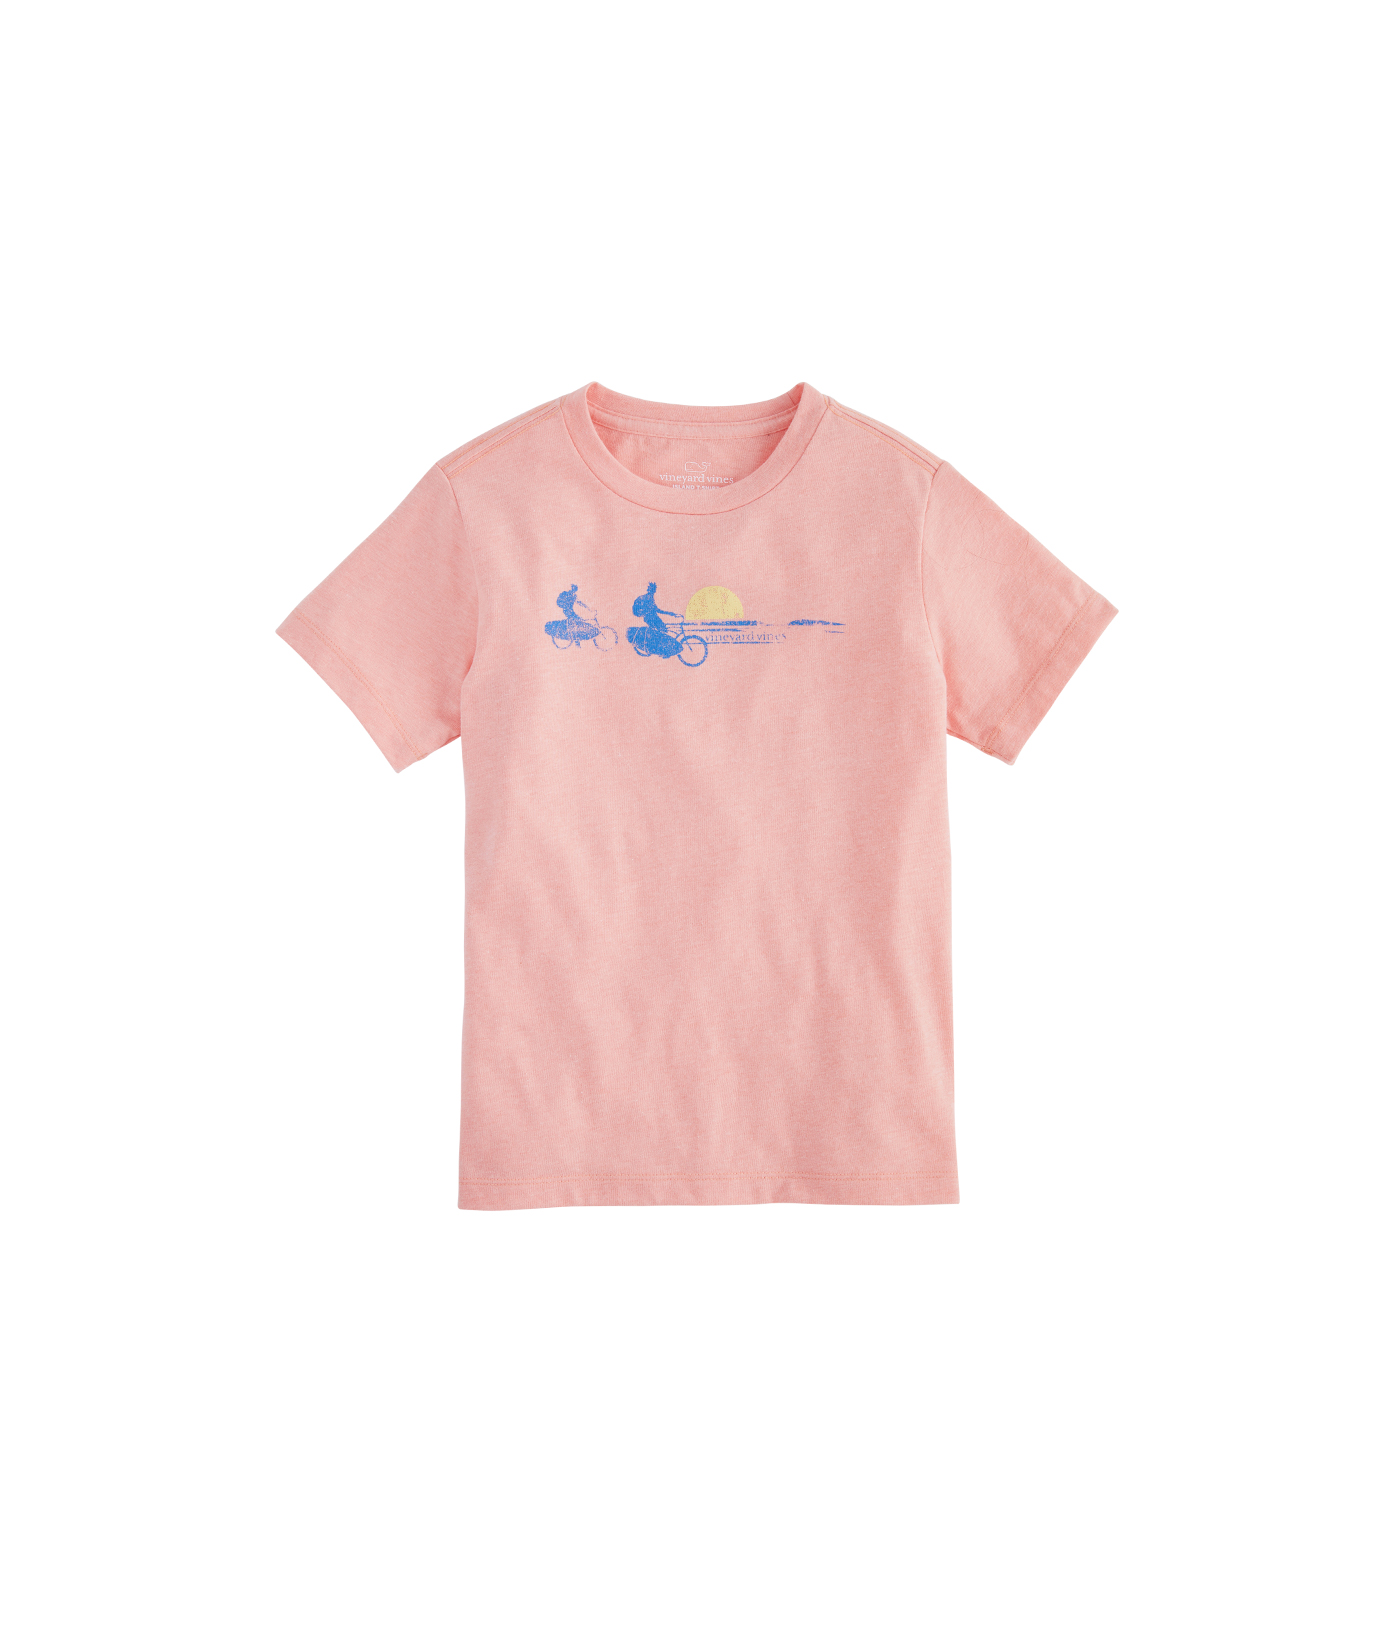 Shop Boys Surf Scouting Island Ringer T-Shirt at vineyard vines